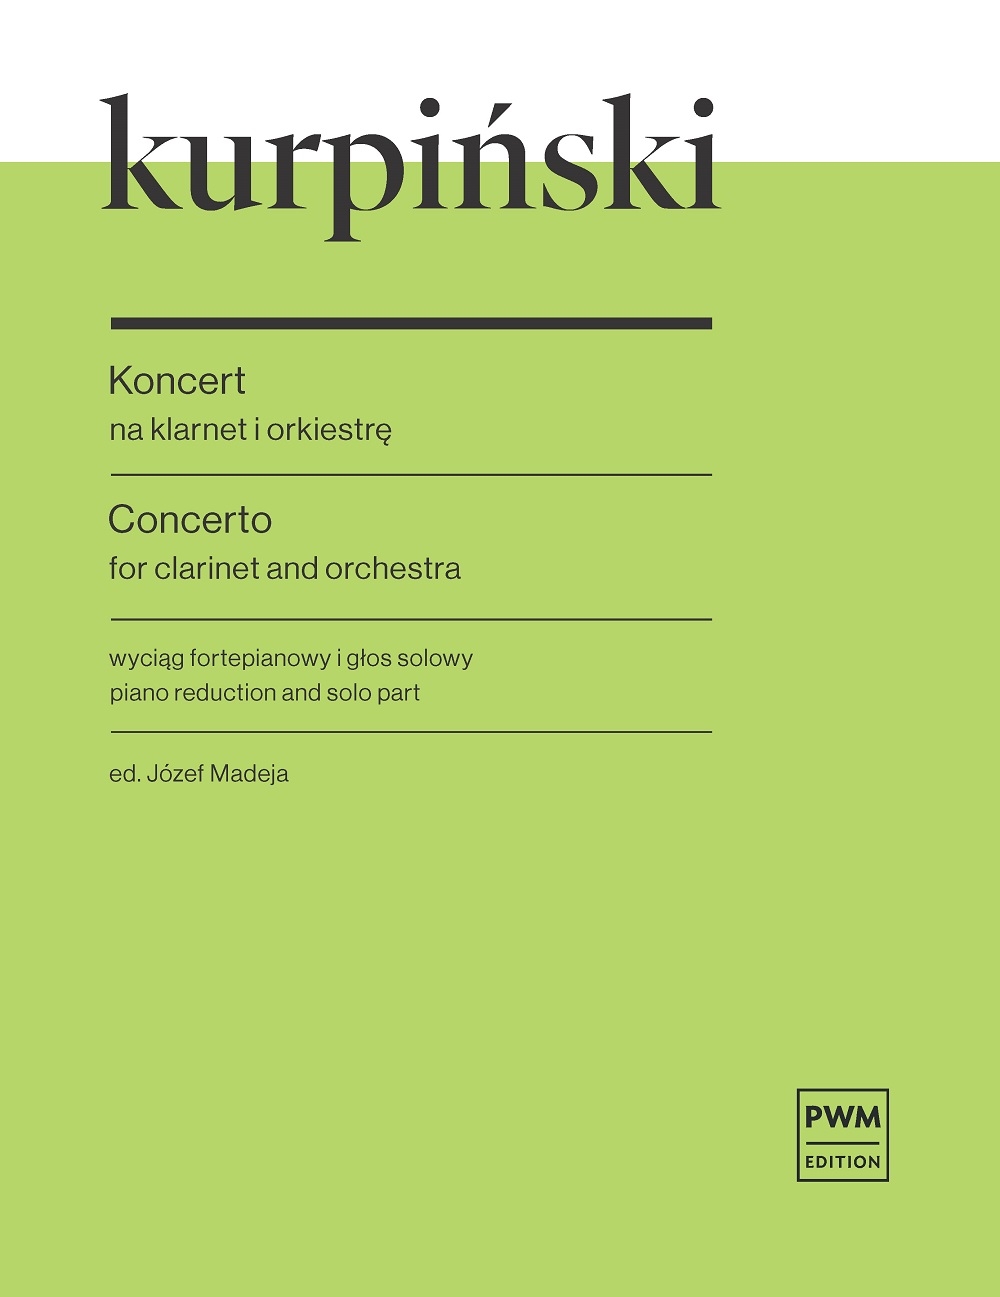 Karol Kurpinski: Clarinet Concerto in B flat major: Clarinet: Parts